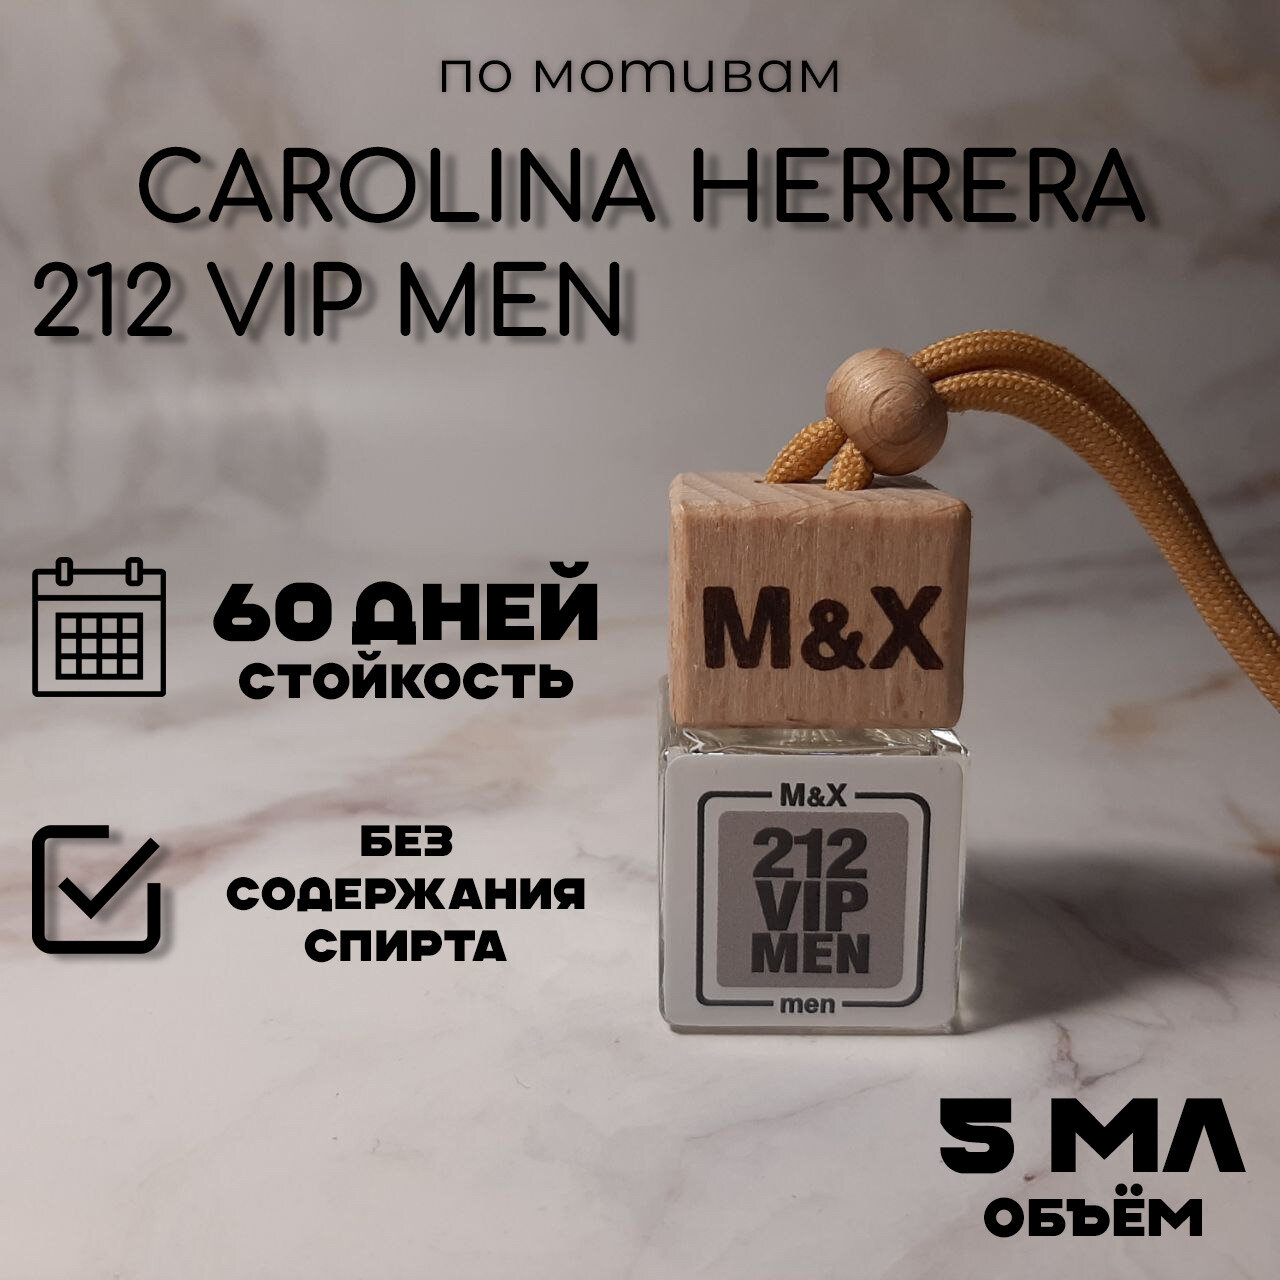 Автопарфюм "M&X" по мотивам "Carolina Herrera - 212 Vip Men" 5мл